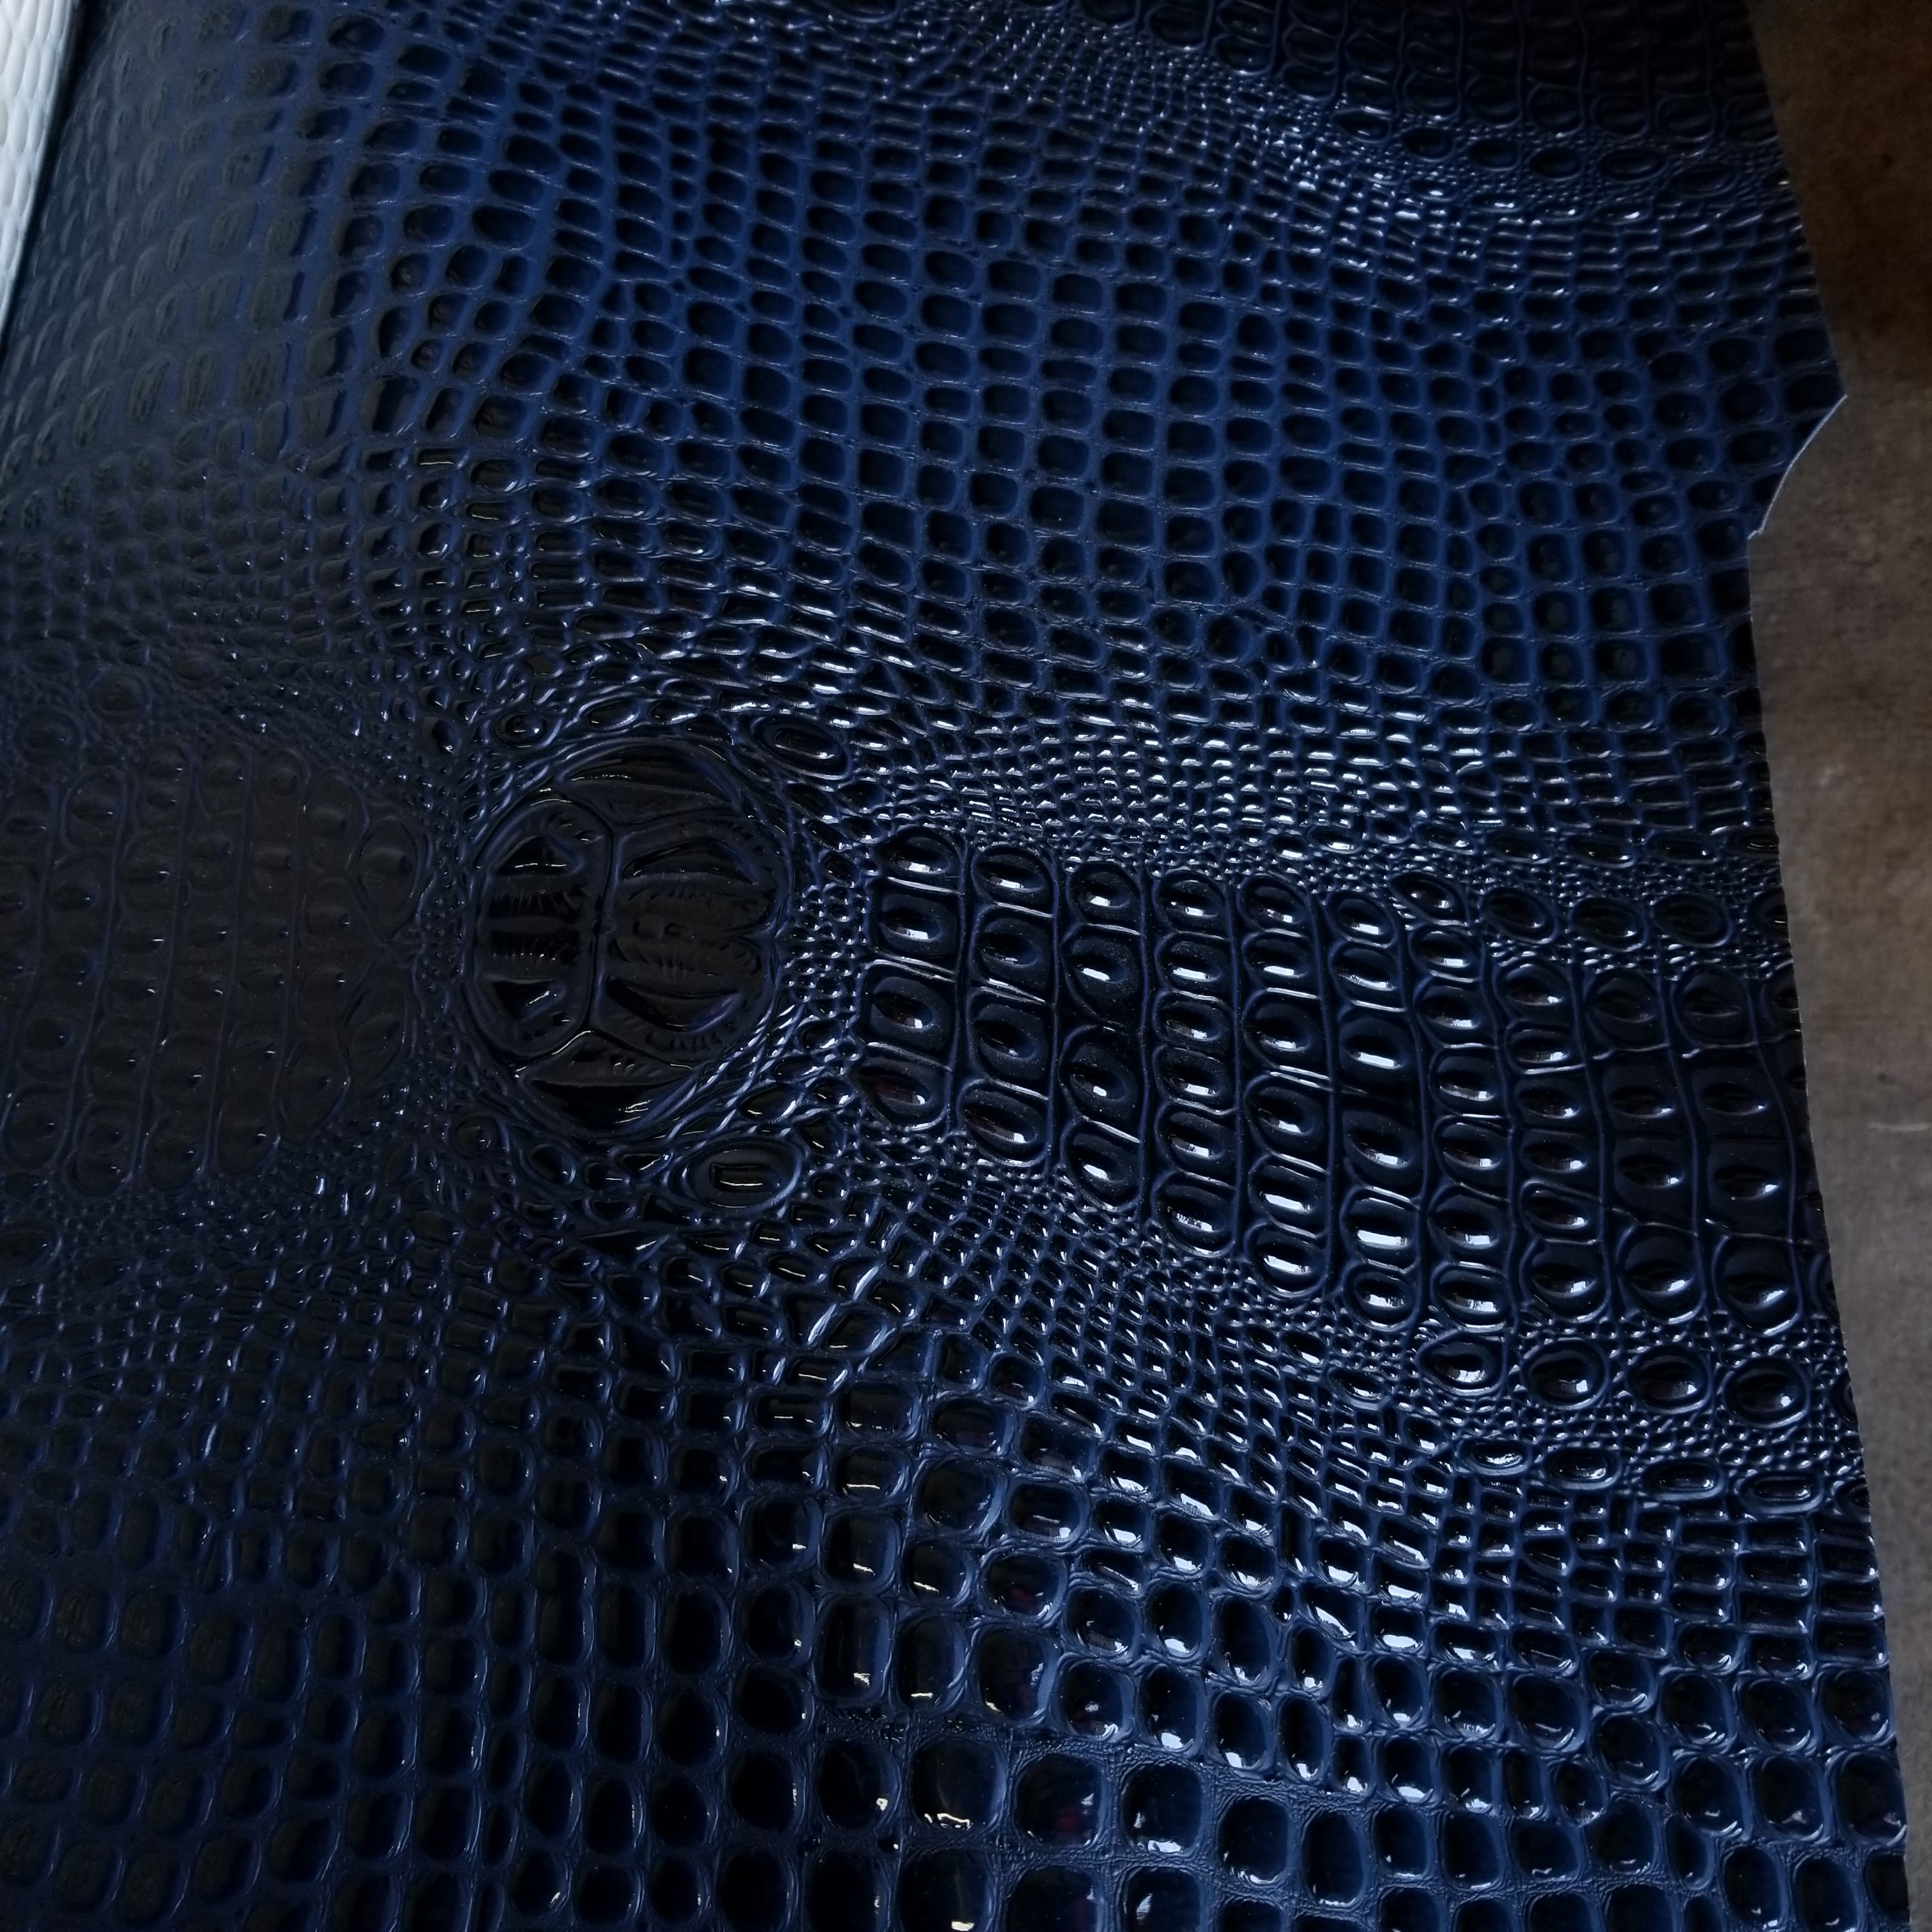 Navy Blue Glossy Crocodile Leather Belt